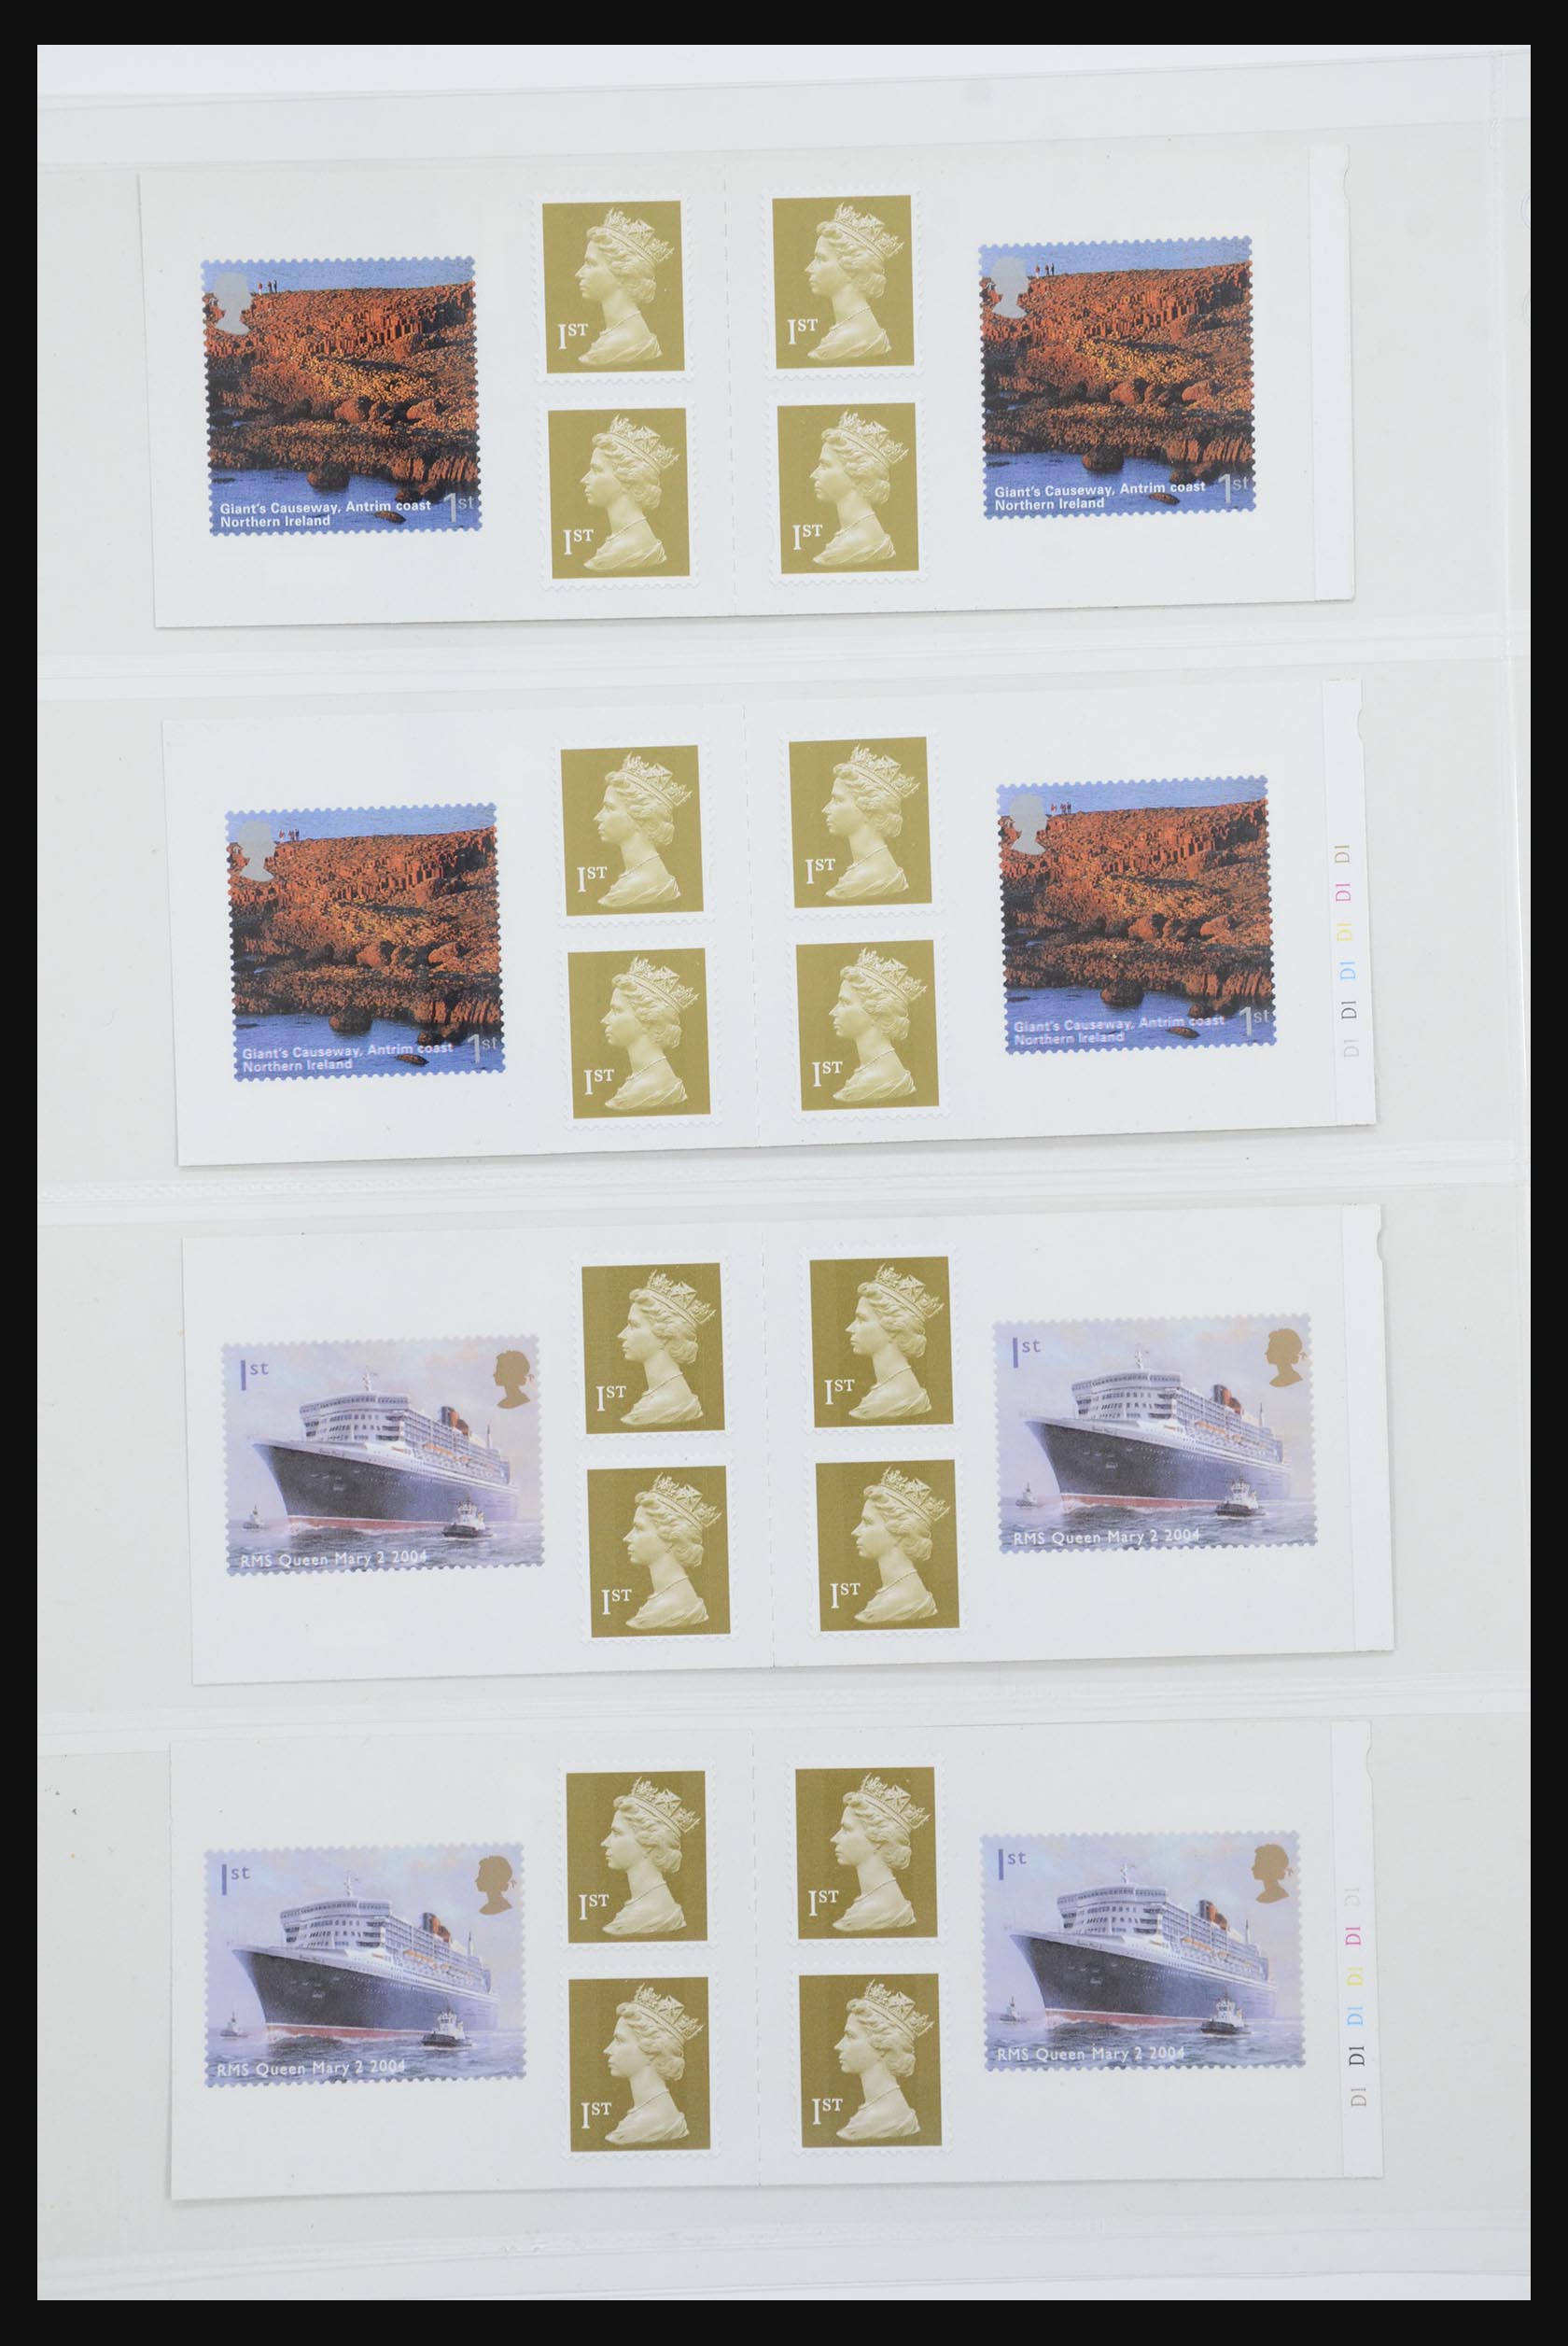 31959 374 - 31959 Great Britain stampbooklets 1987-2016!!